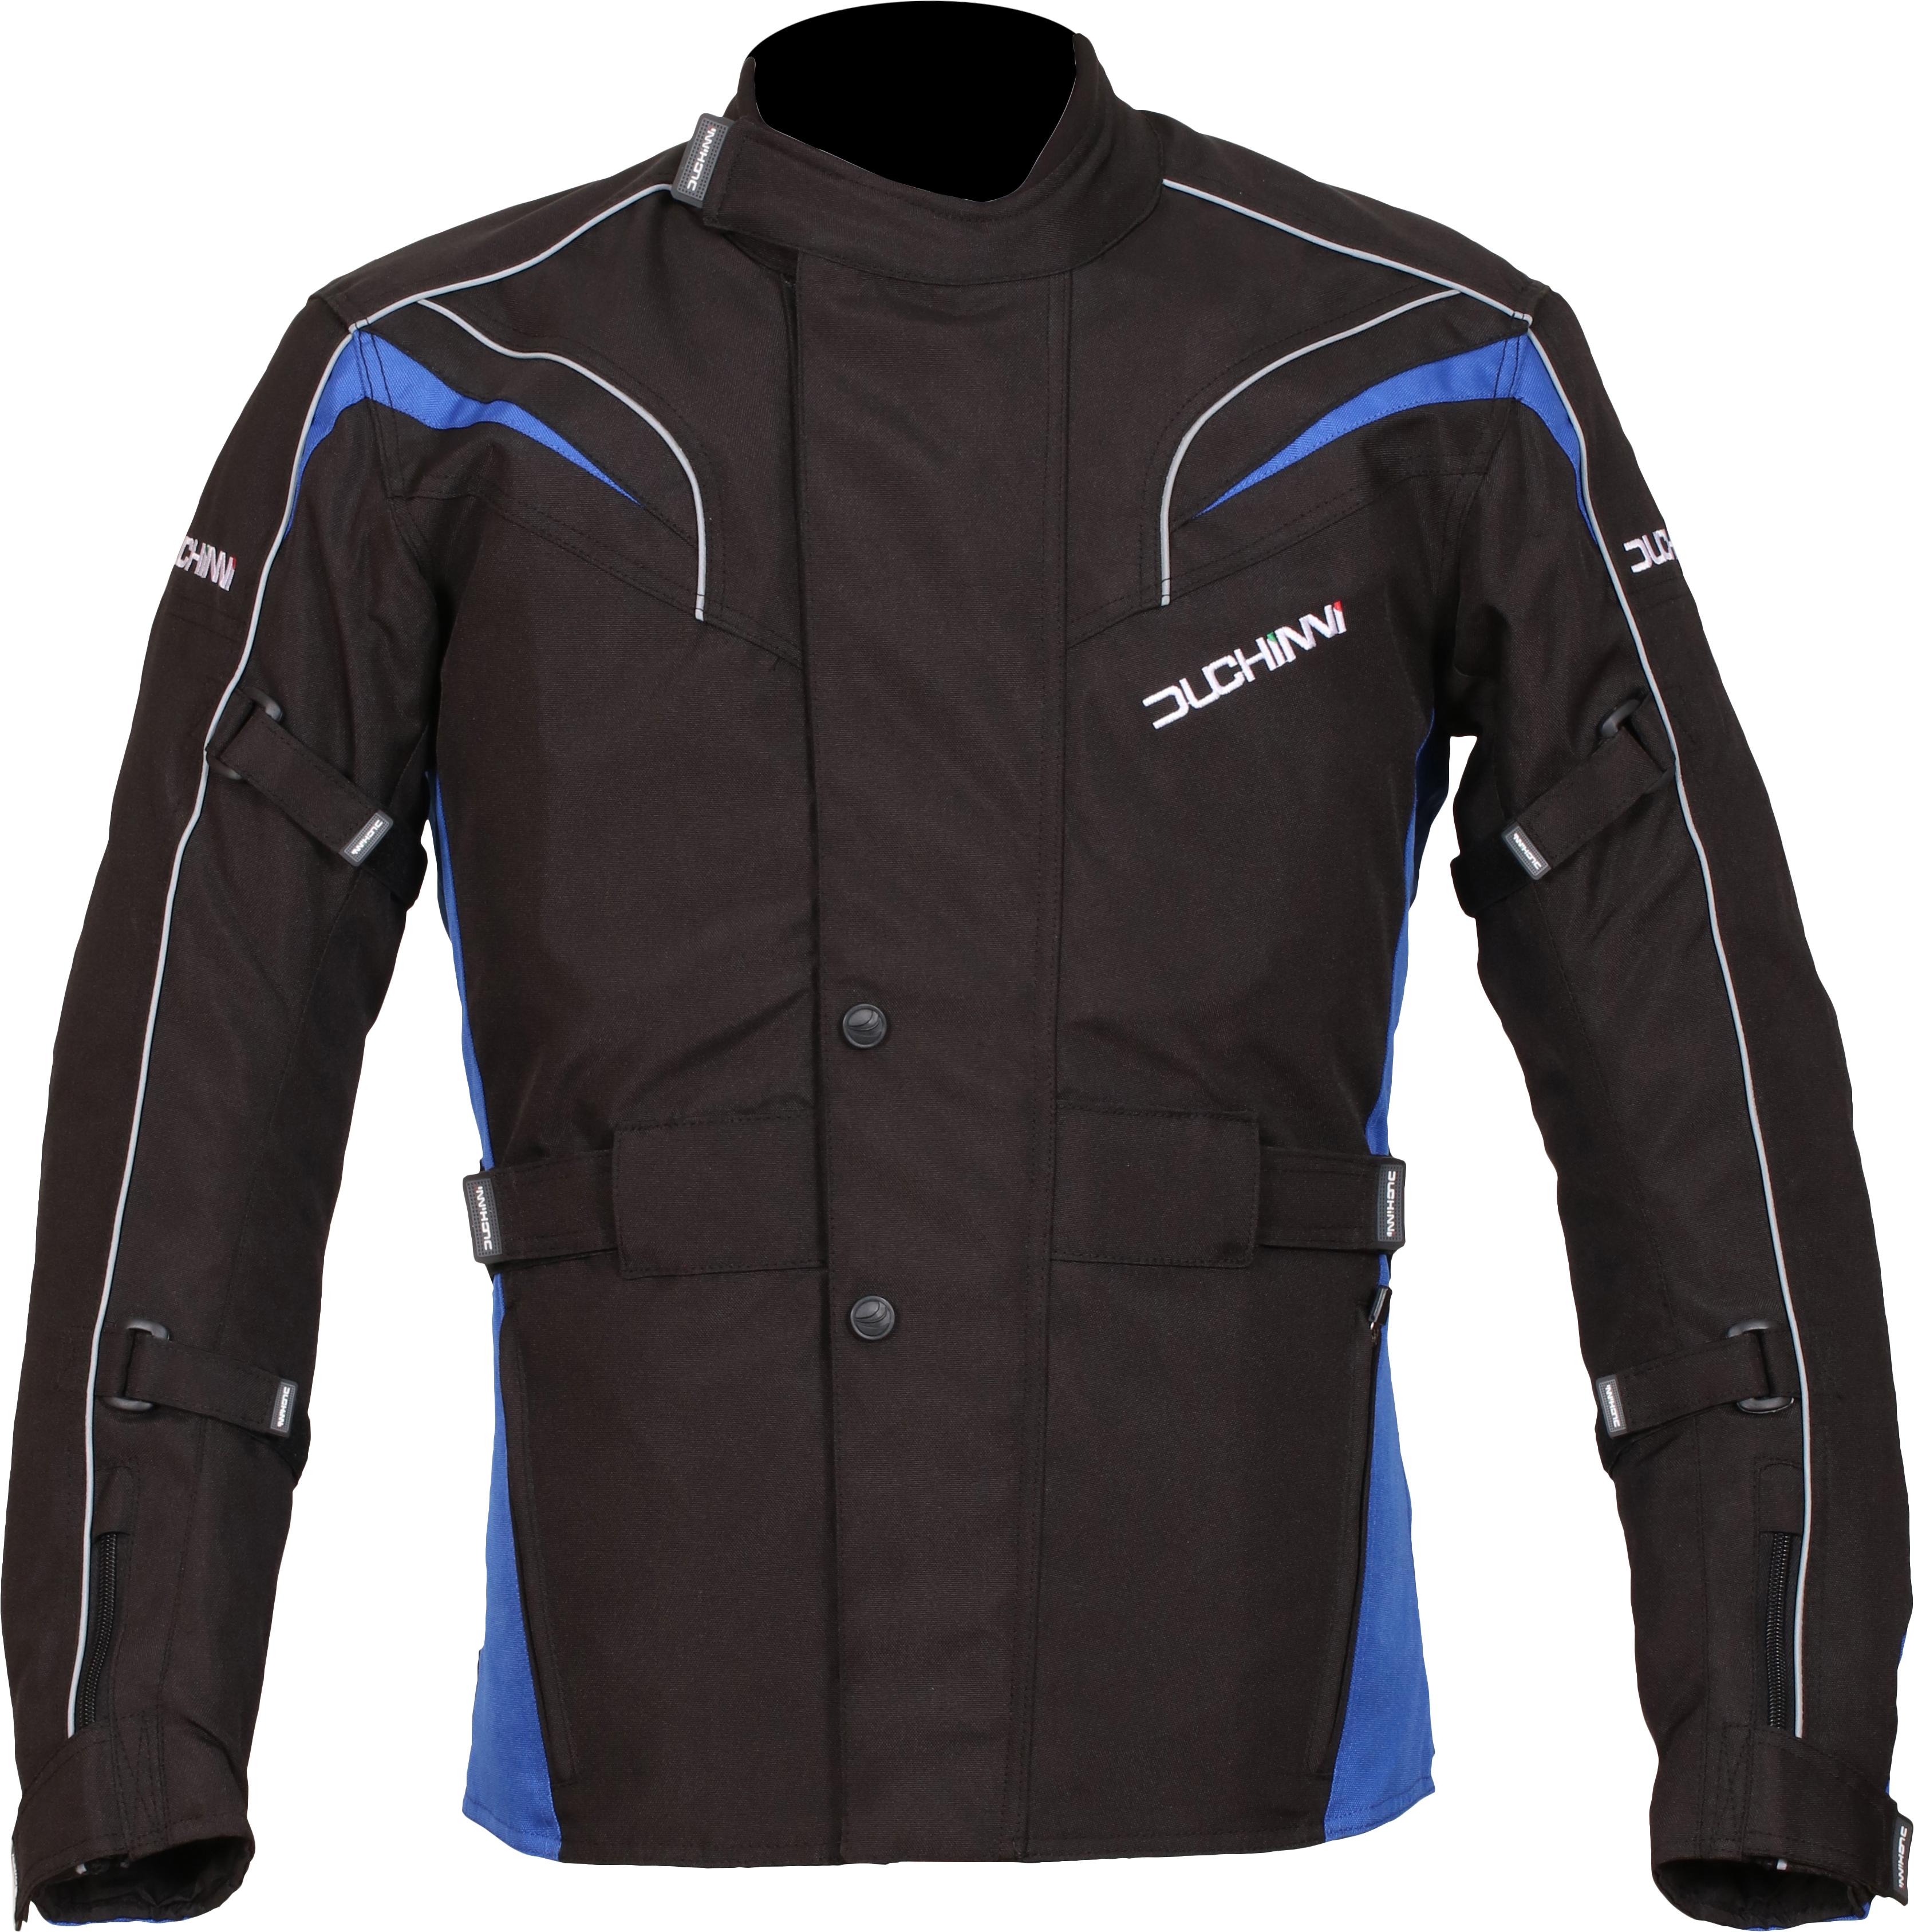 Duchinni Hurricane Motorcycle Jacket - Black And Blue, M